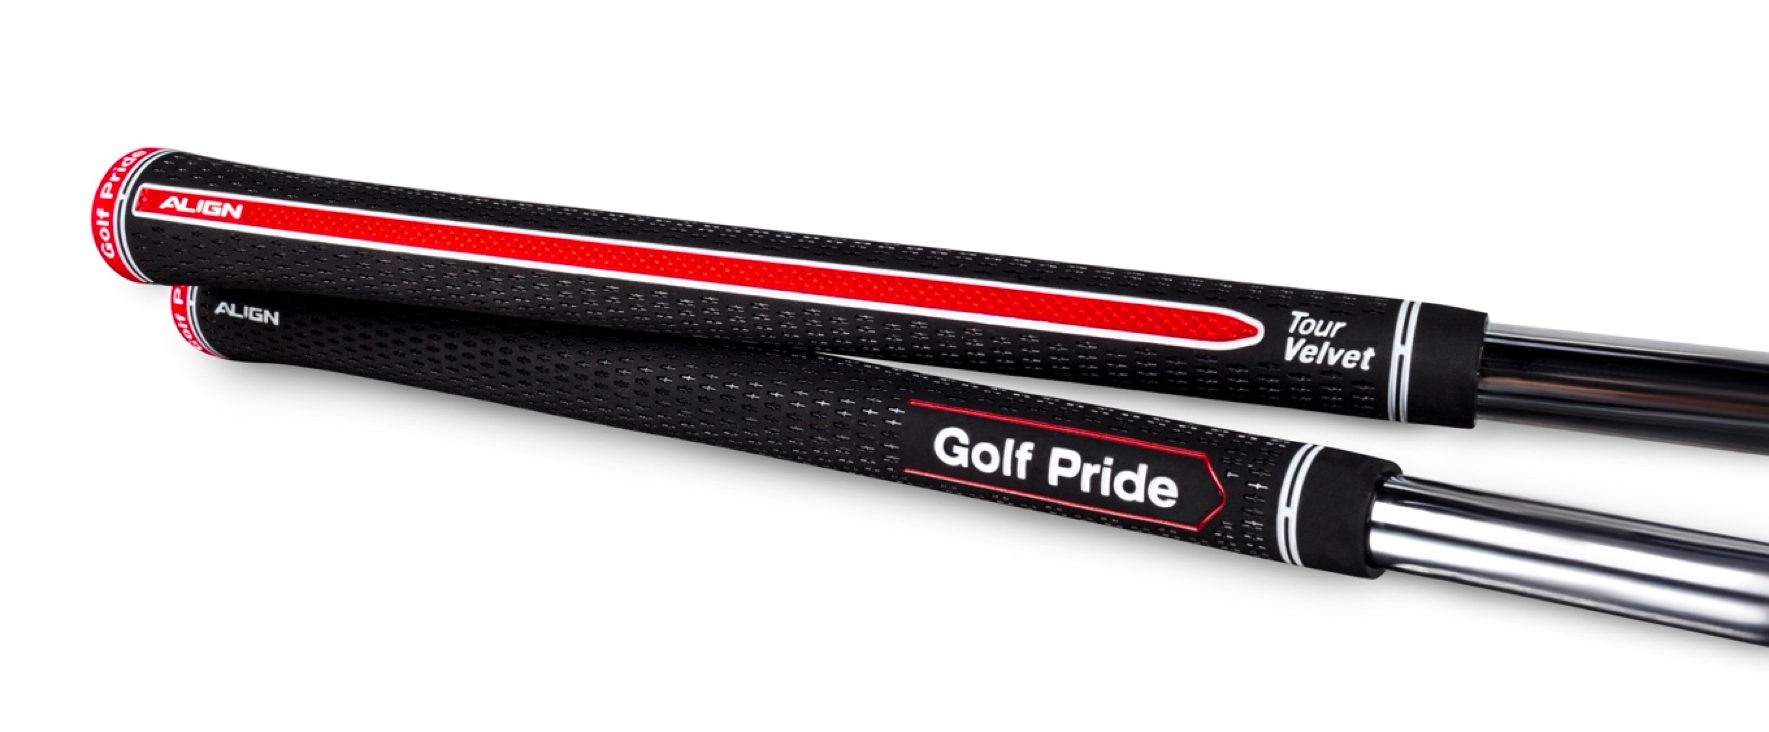 Golf Pride Tour Velvet grip now features ALIGN Technology